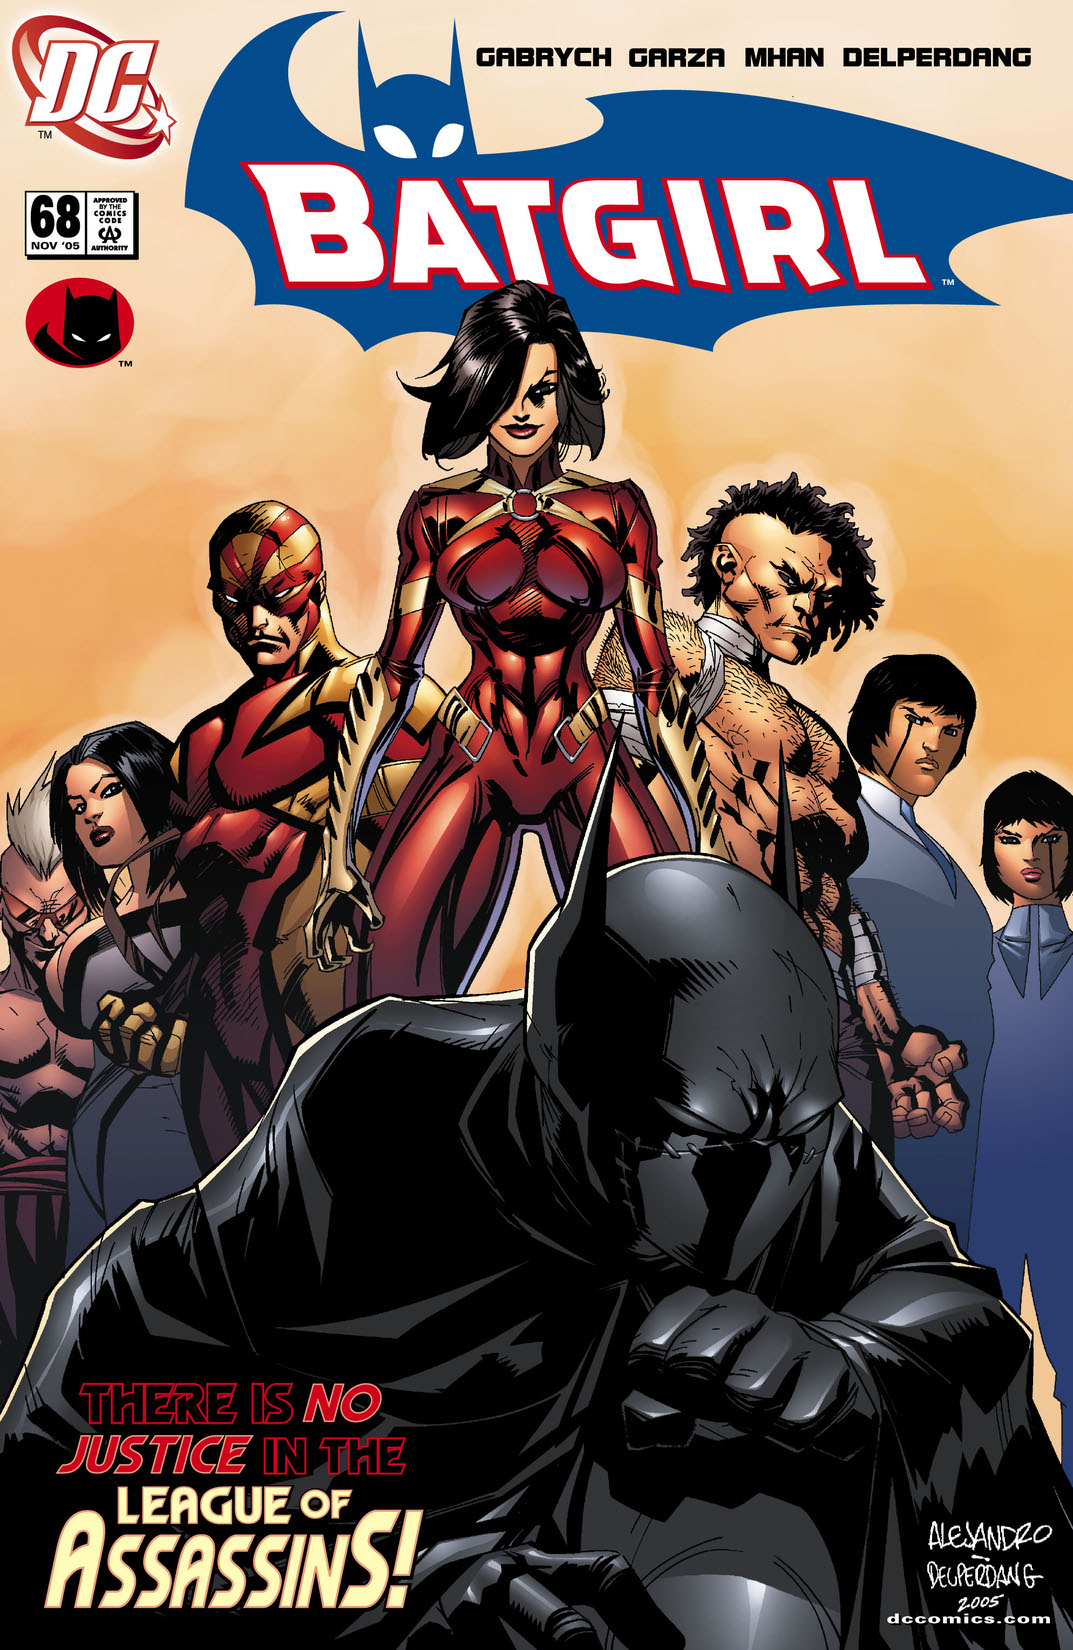 Batgirl (2000-) #68 preview images